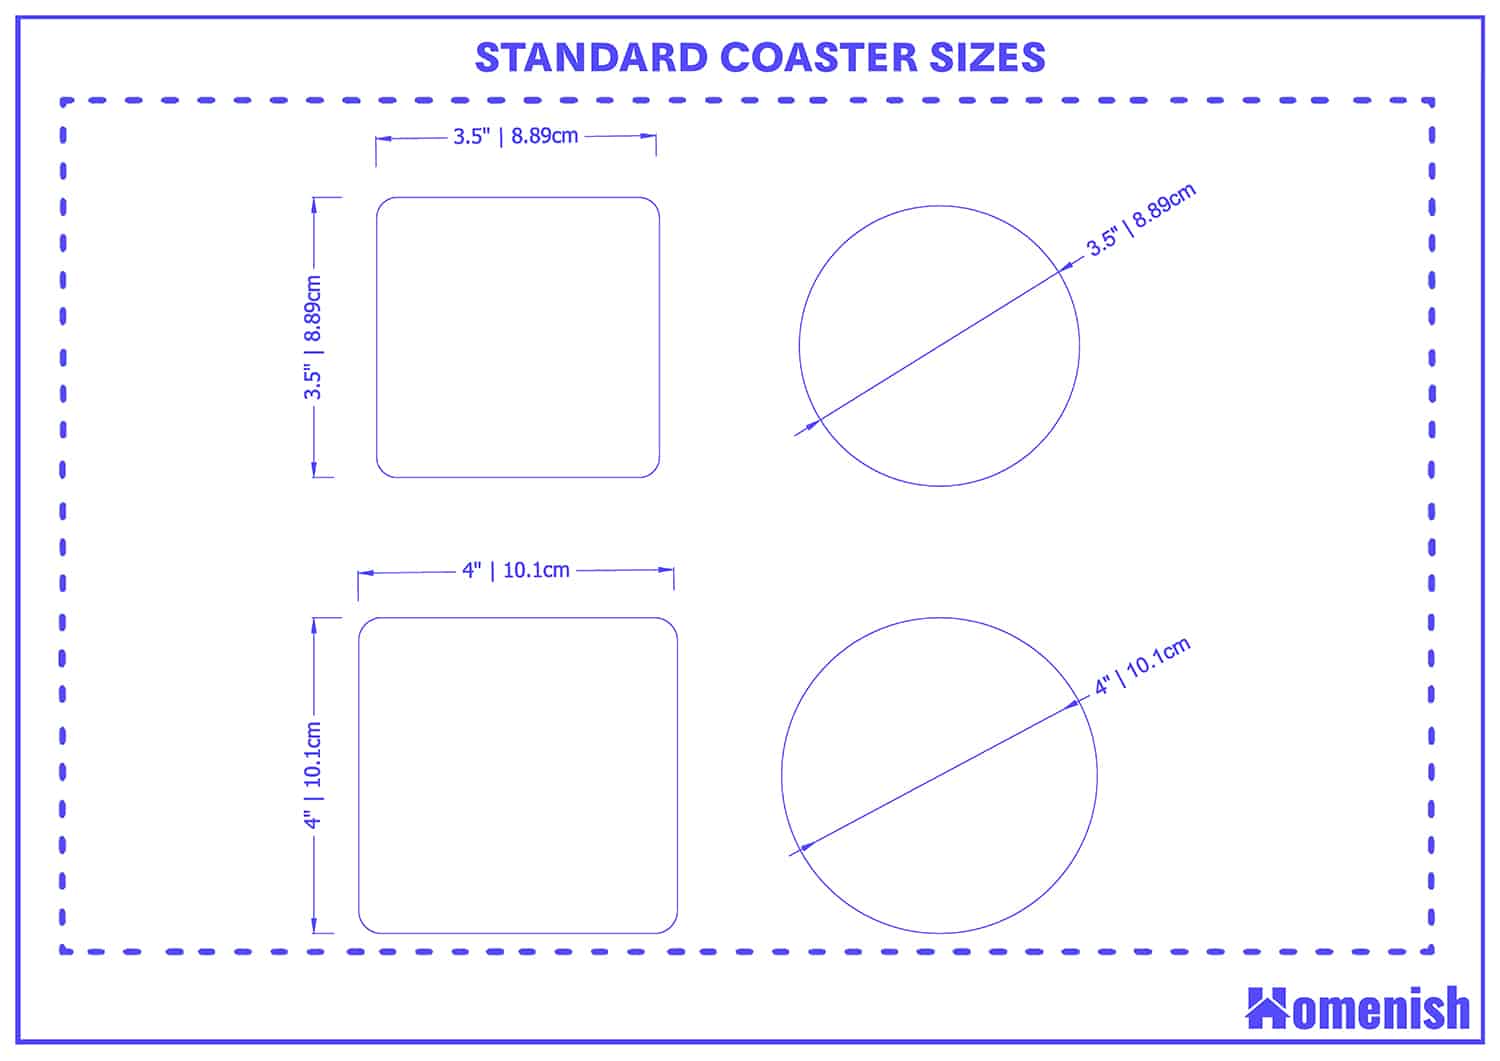 Standard coaster sizes